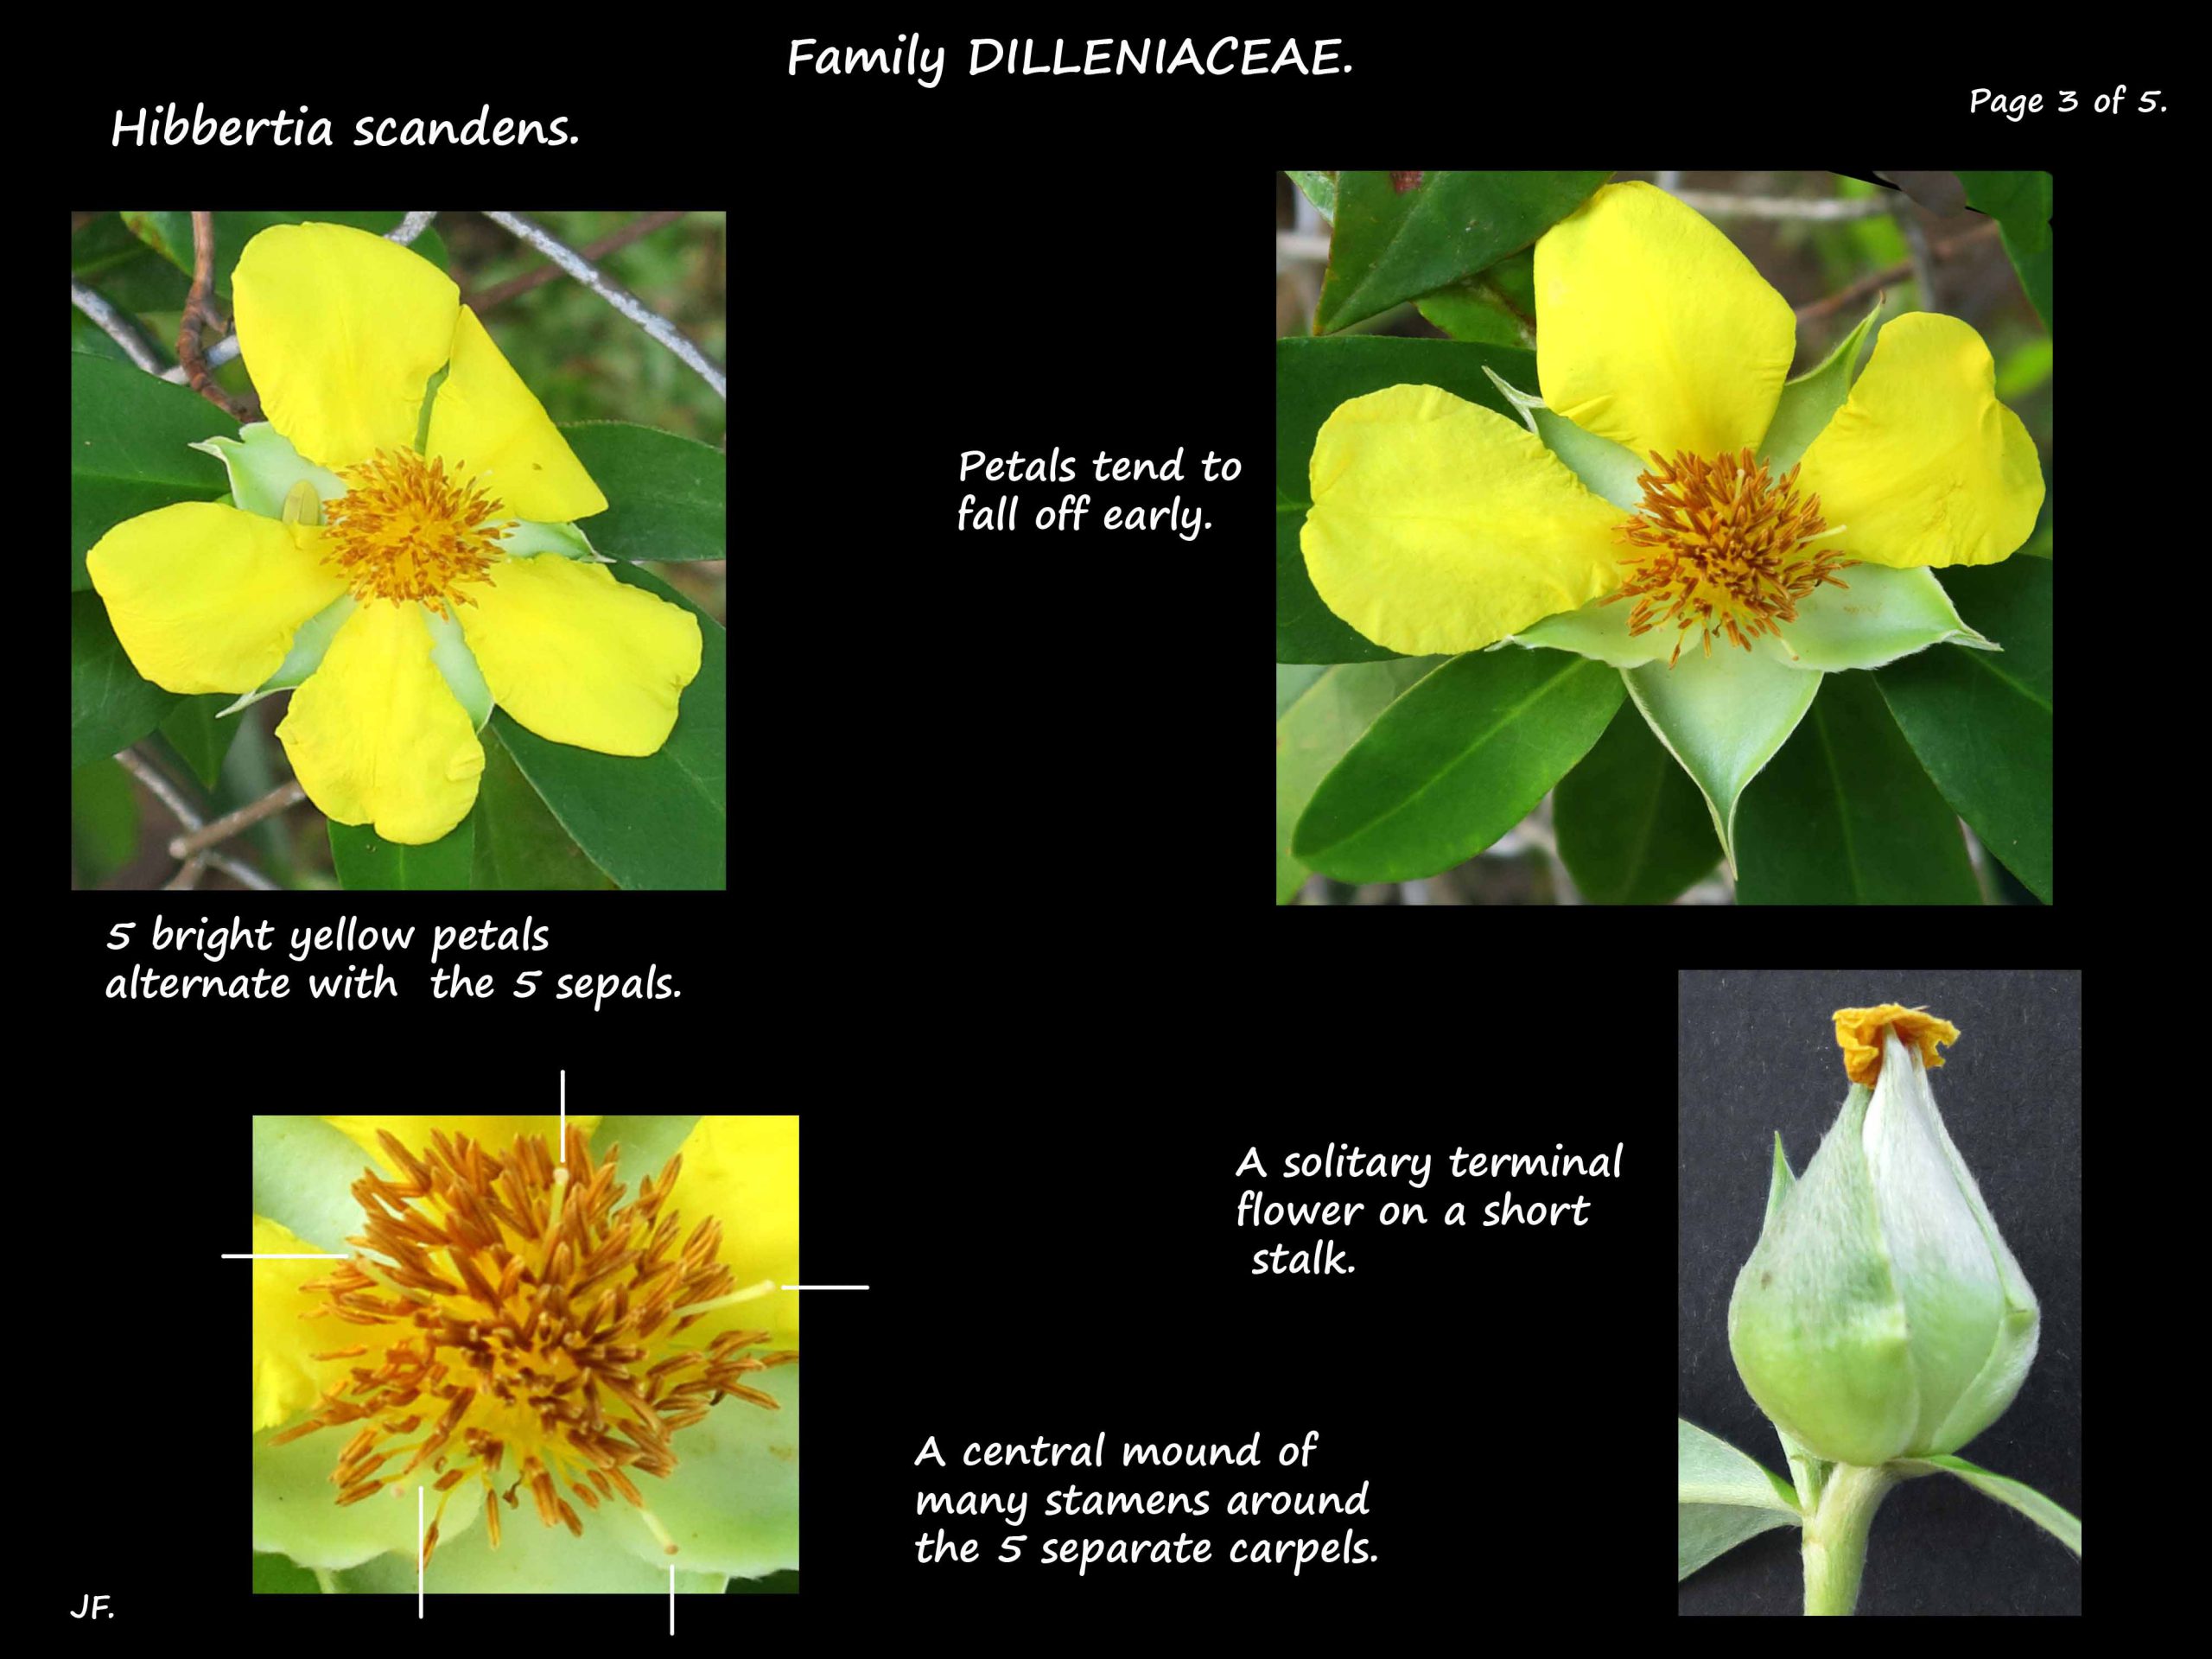 3 Flowers of Hibbertia scandens